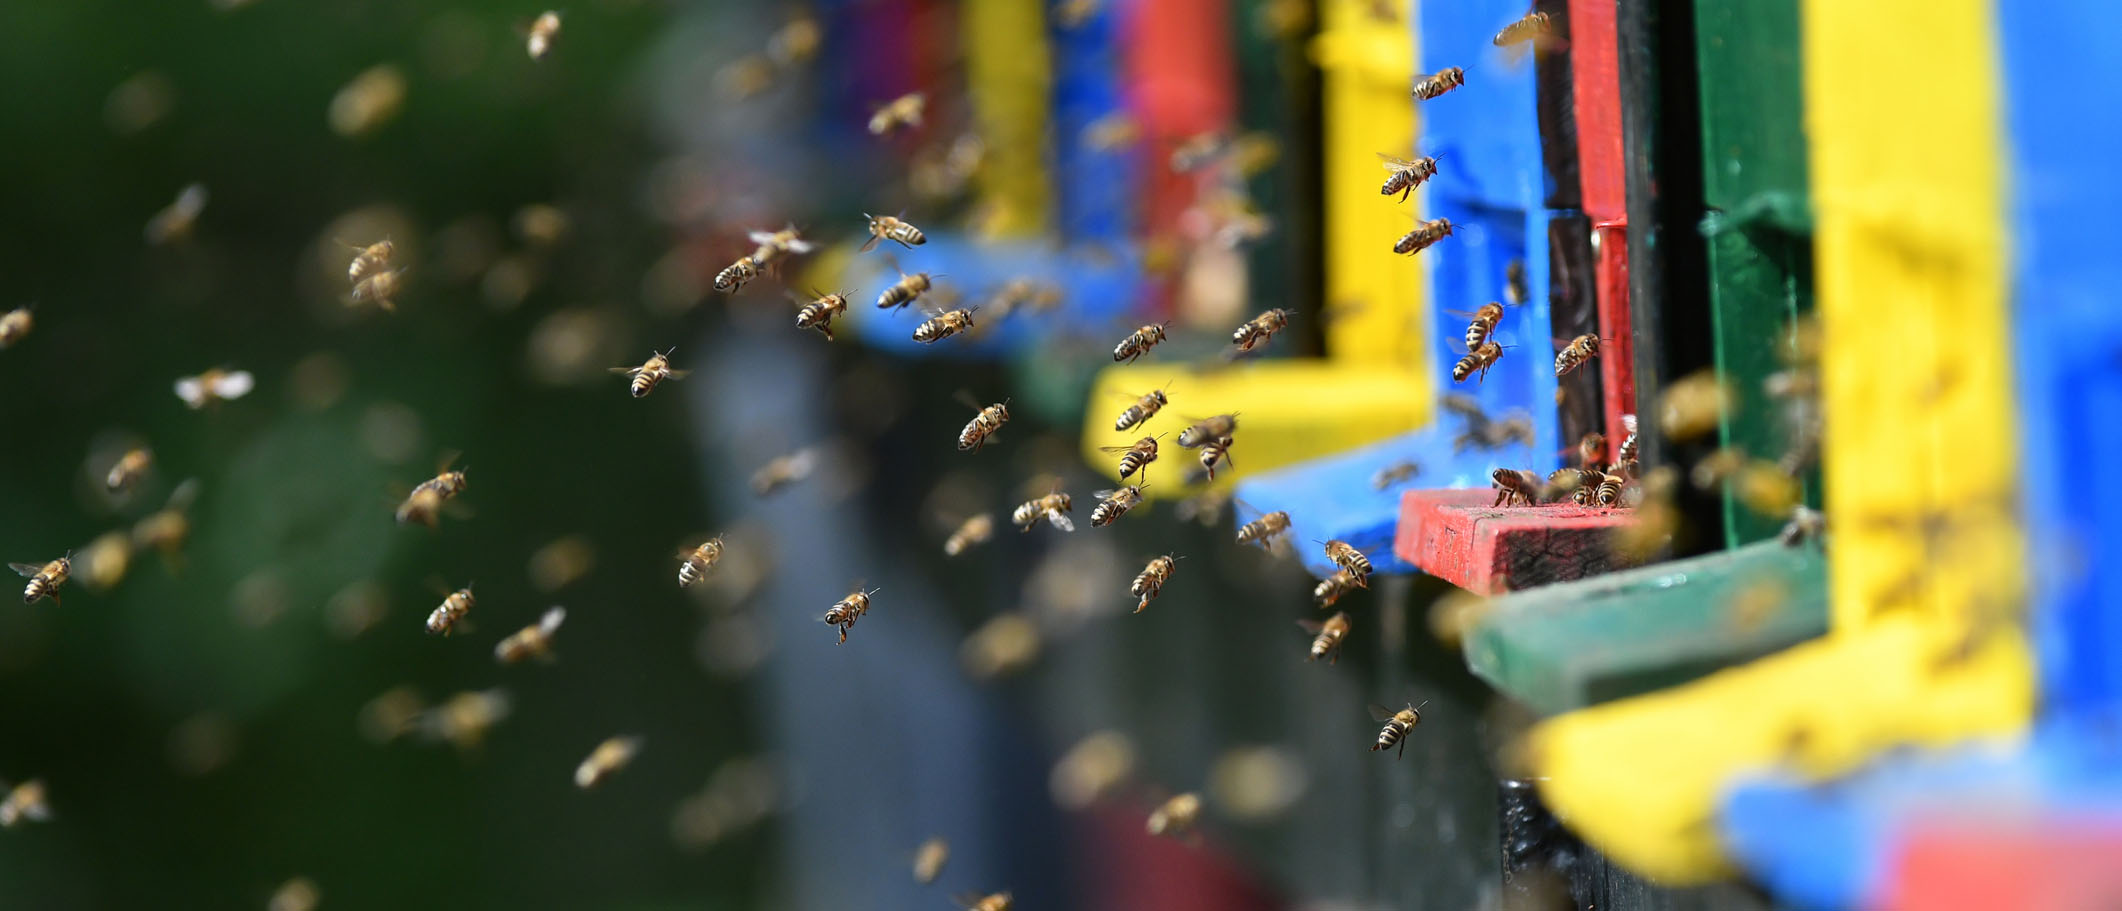 Swarm of bees flying around beehive during spring season